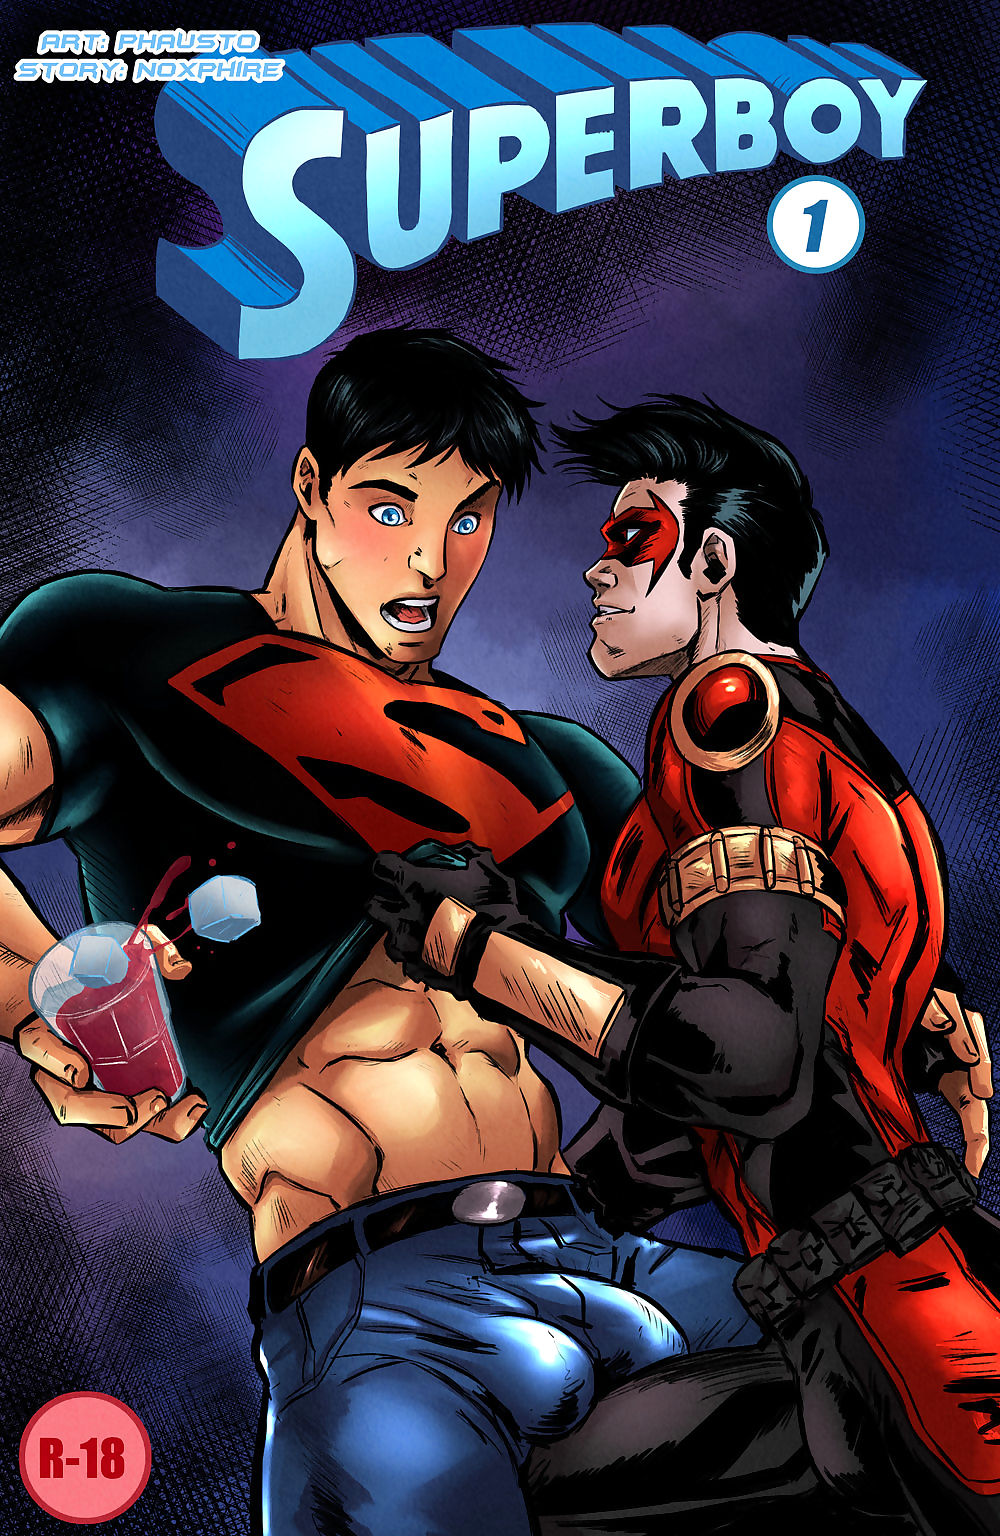 phausto superboy page 1